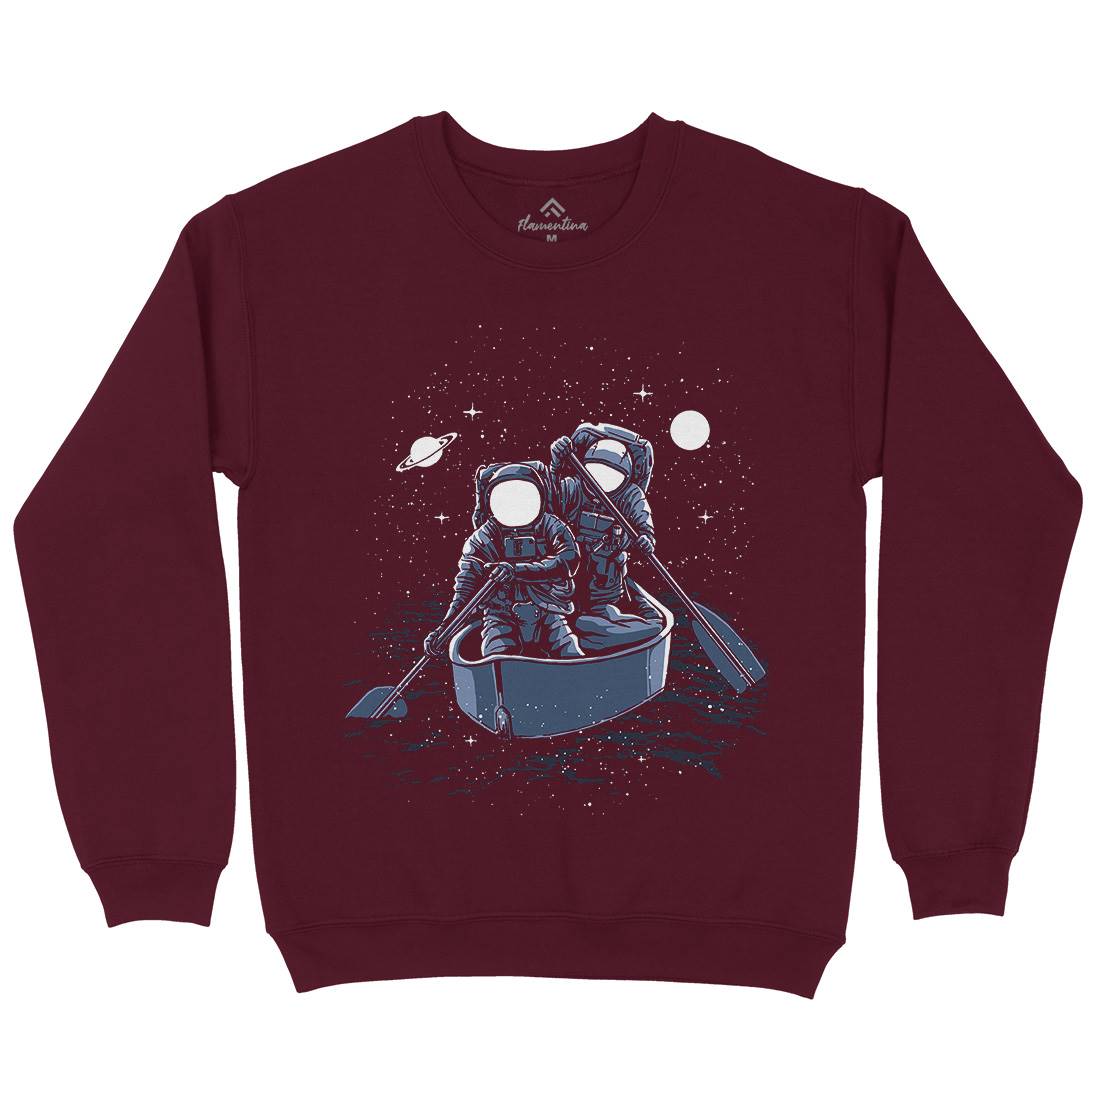 Across The Galaxy Kids Crew Neck Sweatshirt Space A501